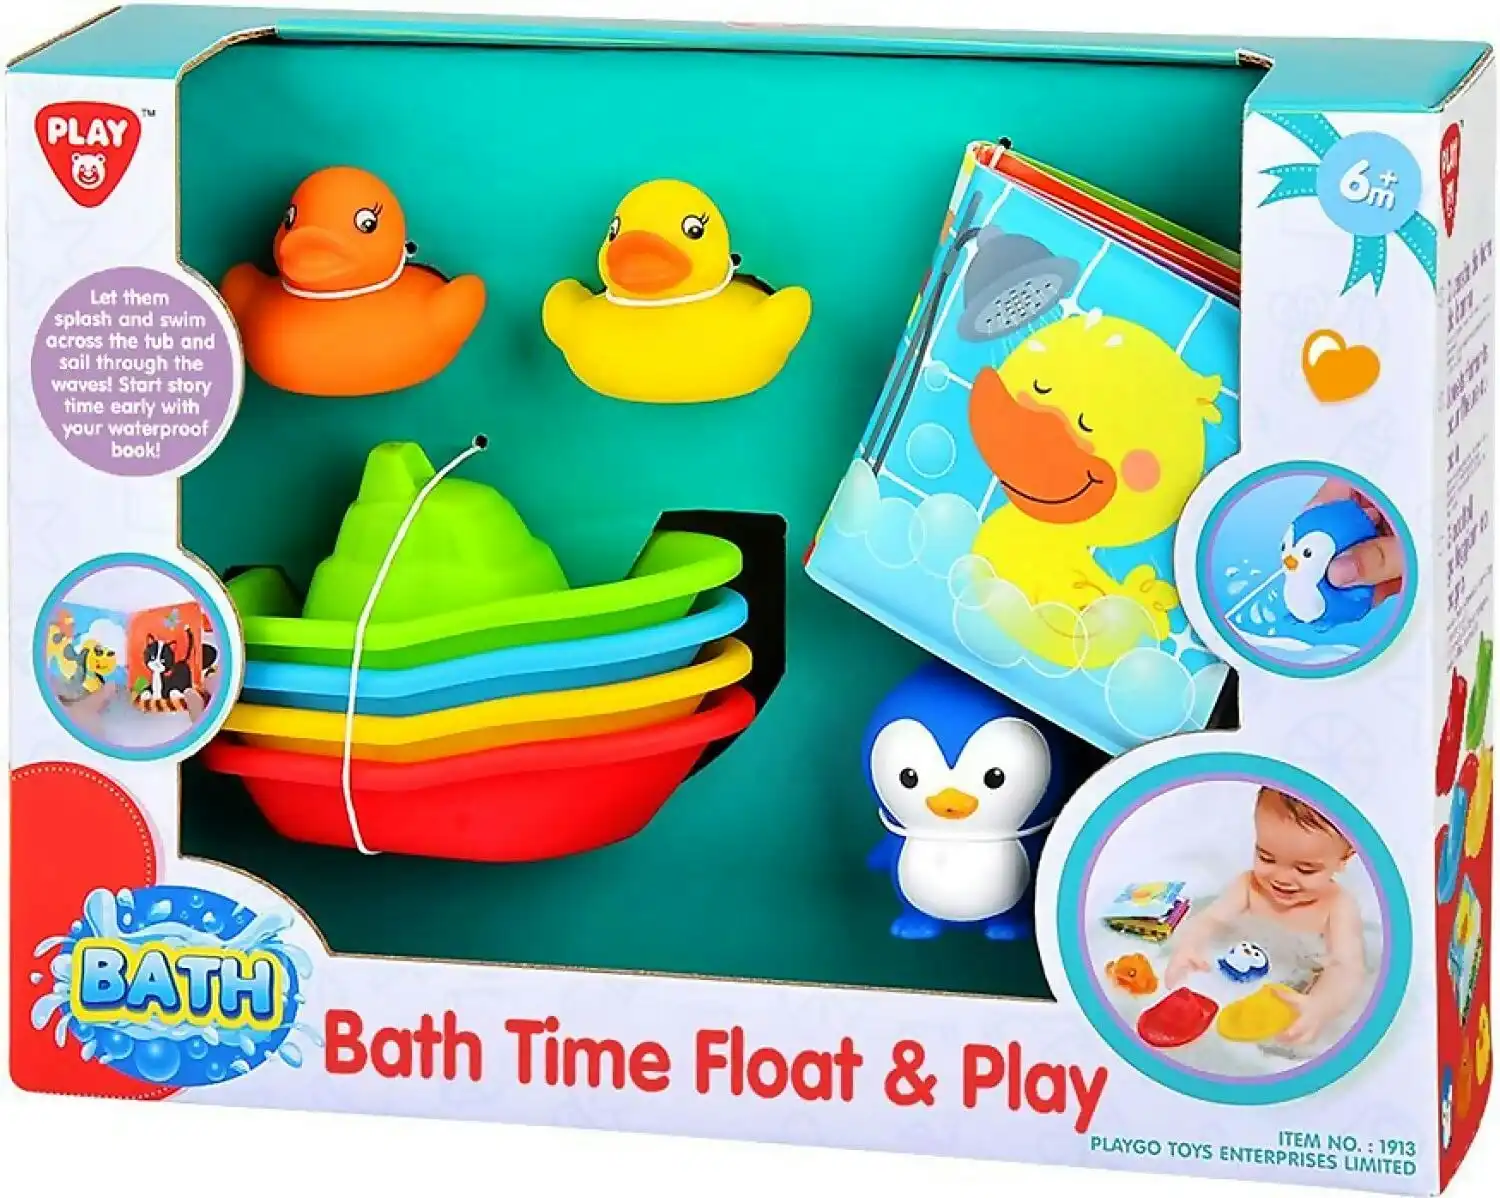 Playgo Toys Ent. Ltd. - Bath Time Float & Play